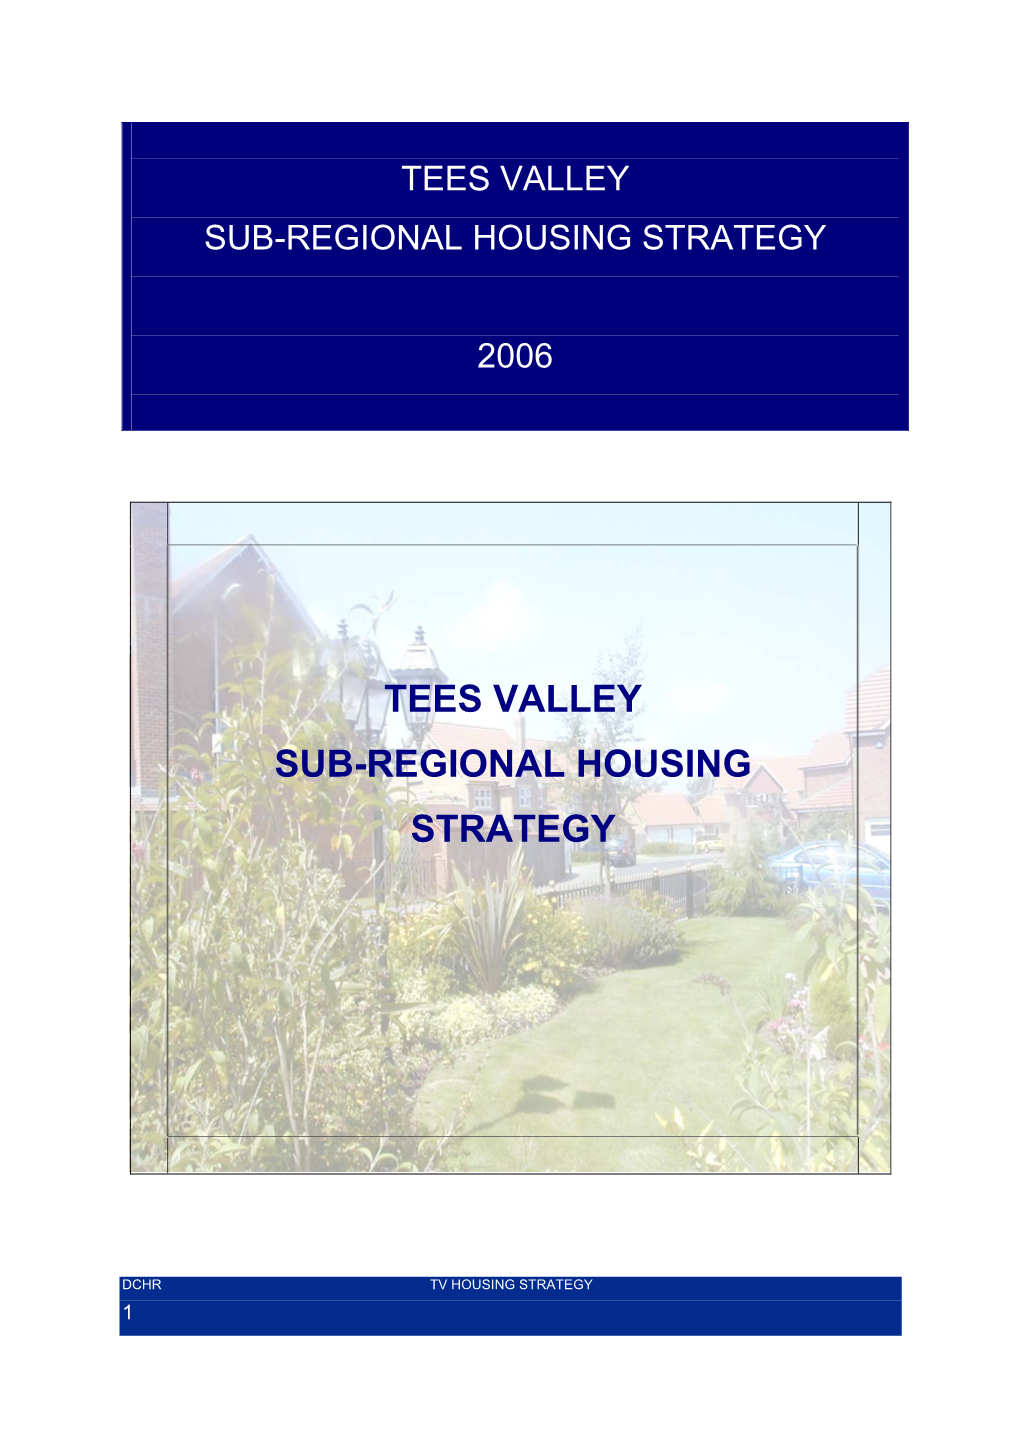 Tees Valley Sub-Regional Housing Strategy